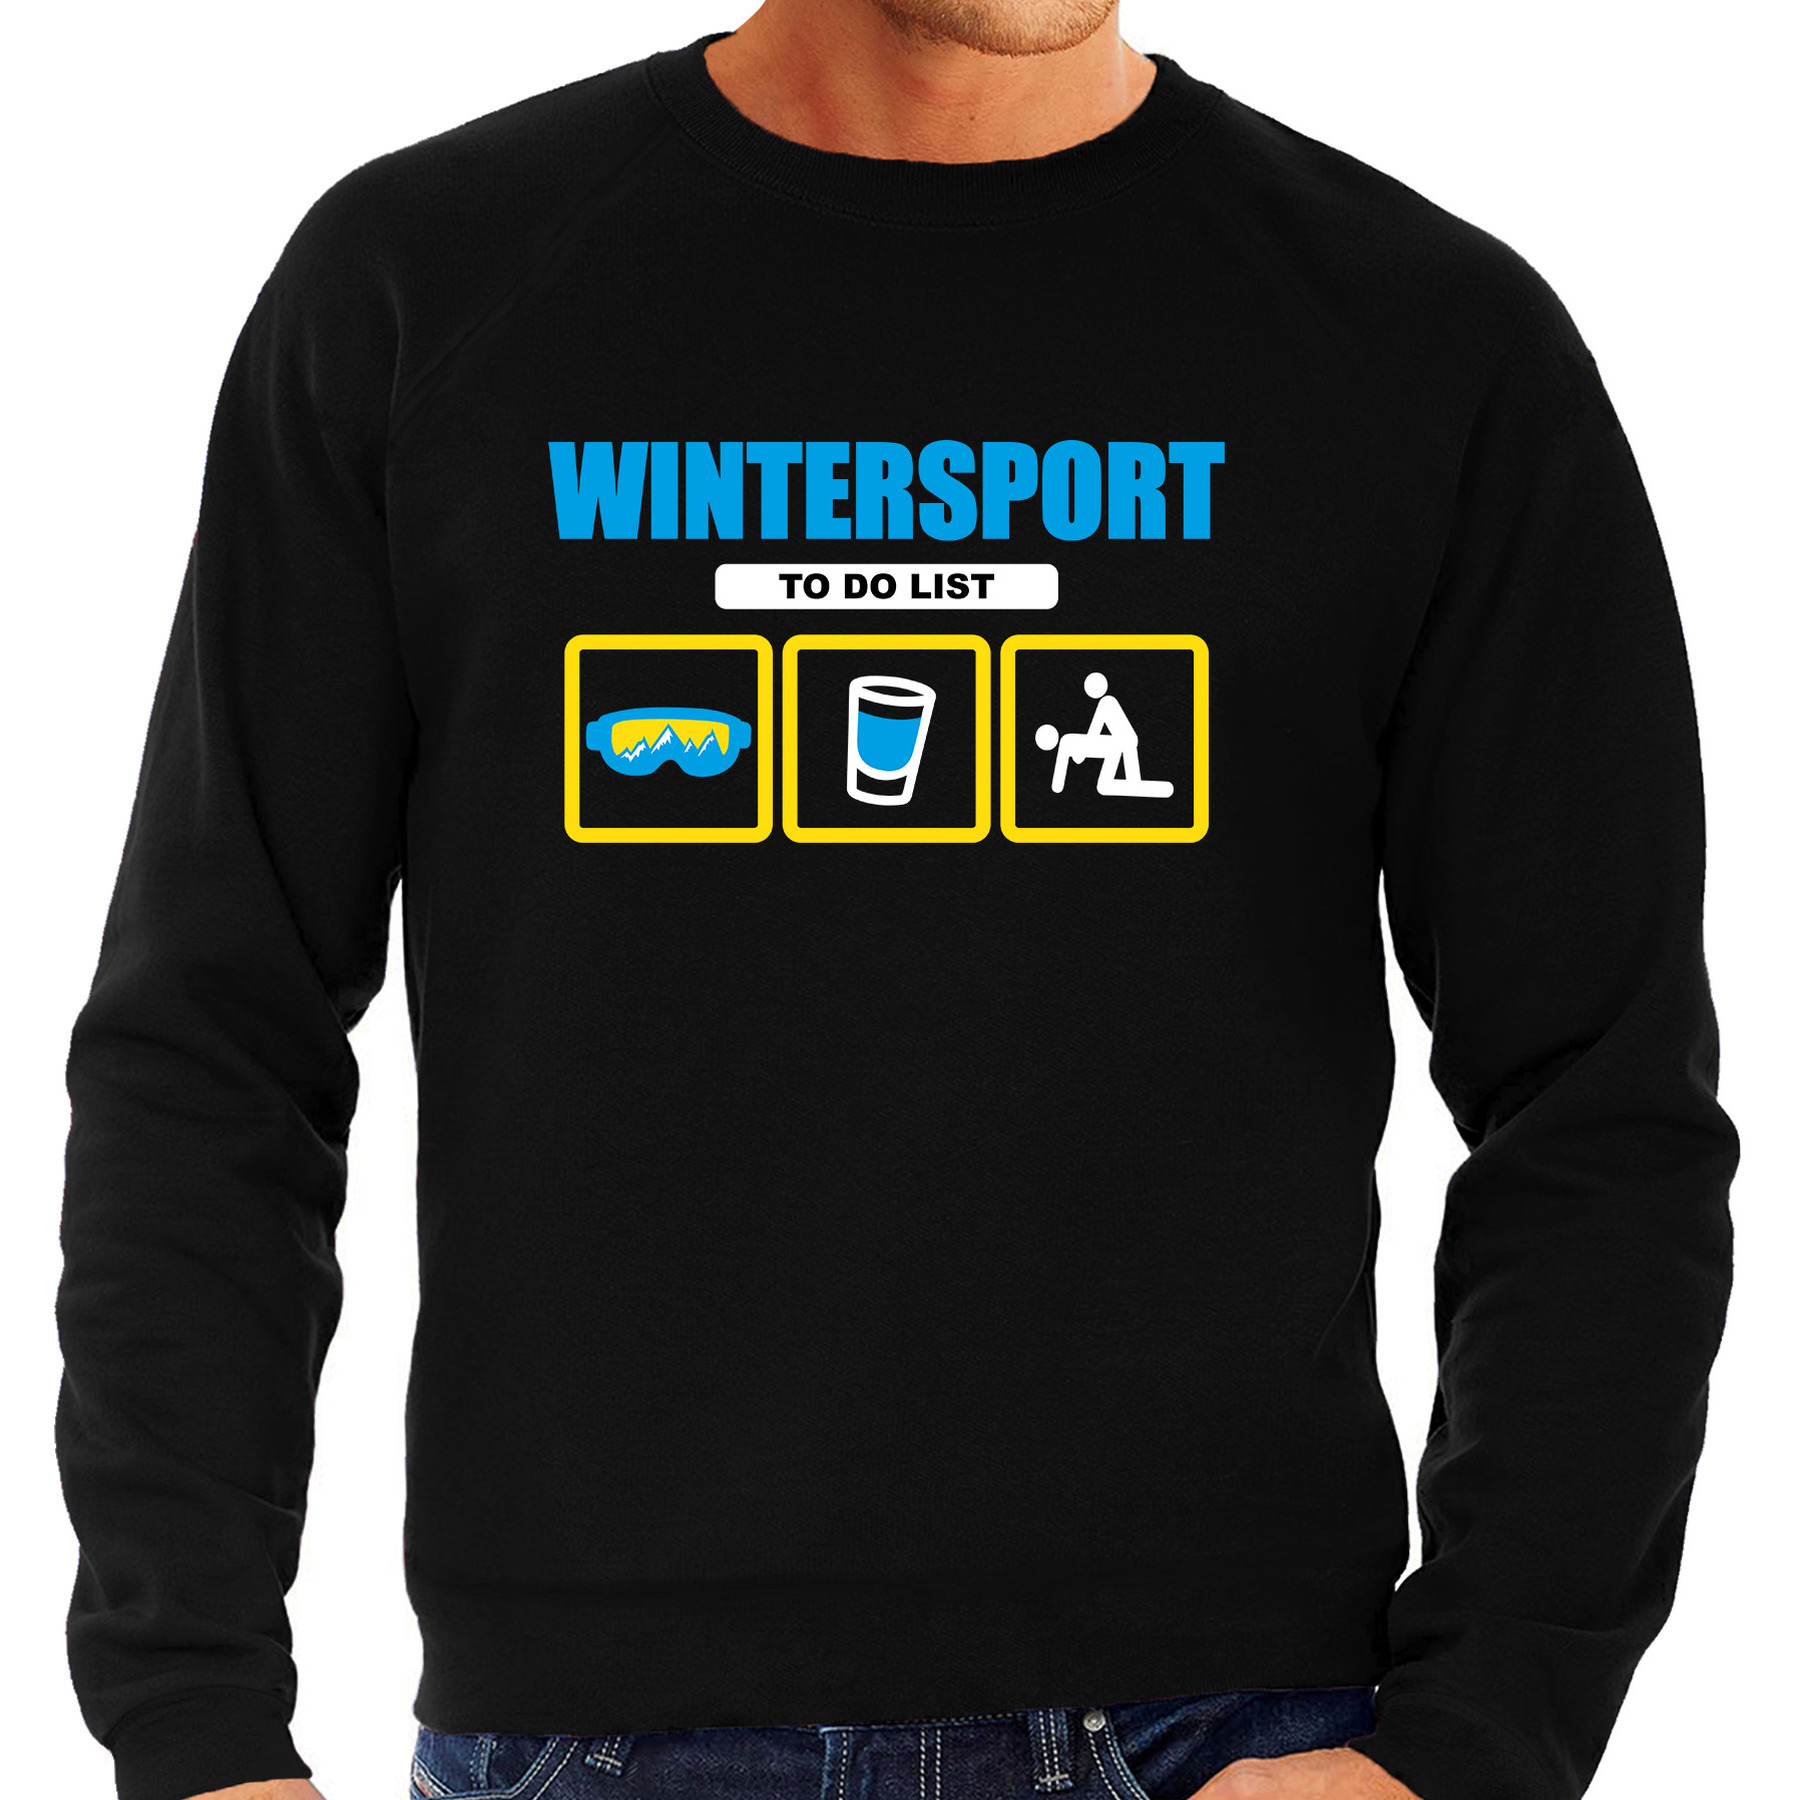 Apres ski trui winterport to do list zwart heren Wintersport sweater Foute apres ski outfit